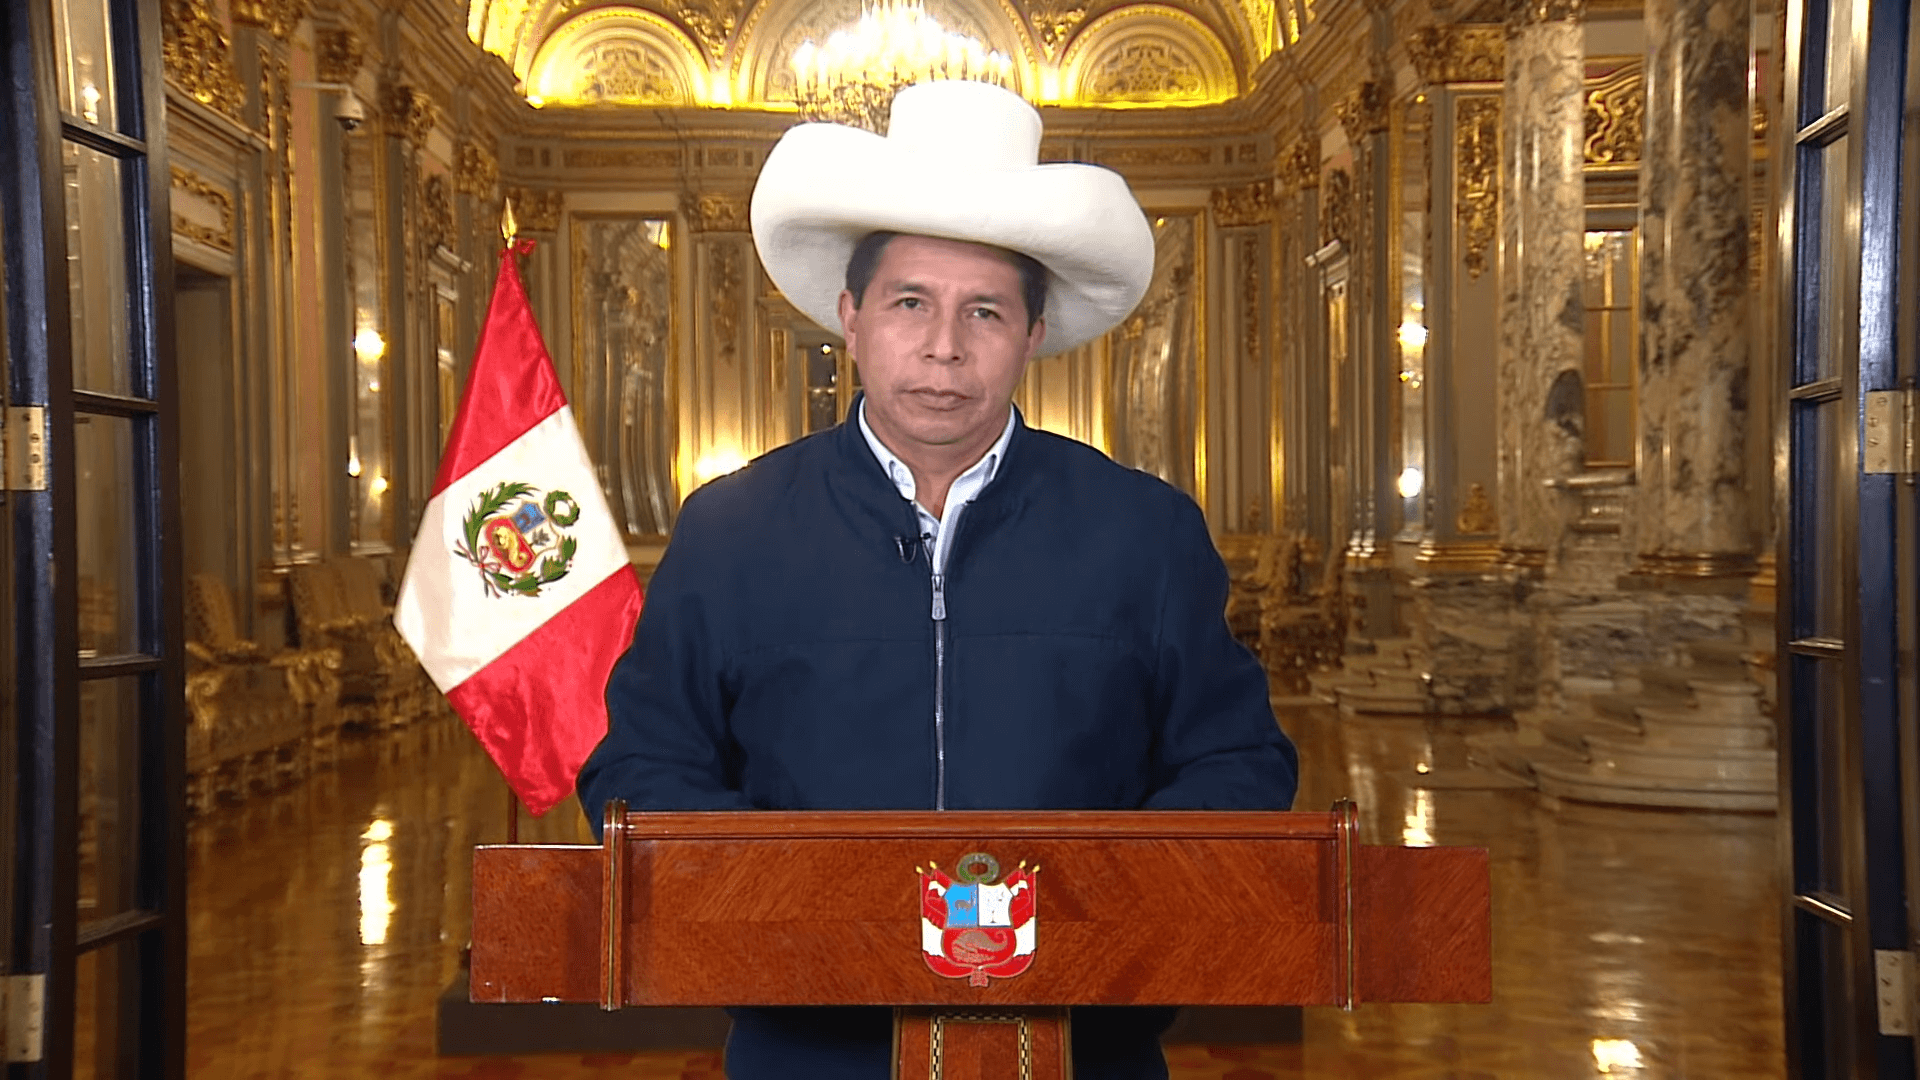 Presidential plagiarism: Peru’s Pedro Castillo takes heat over master’s thesis